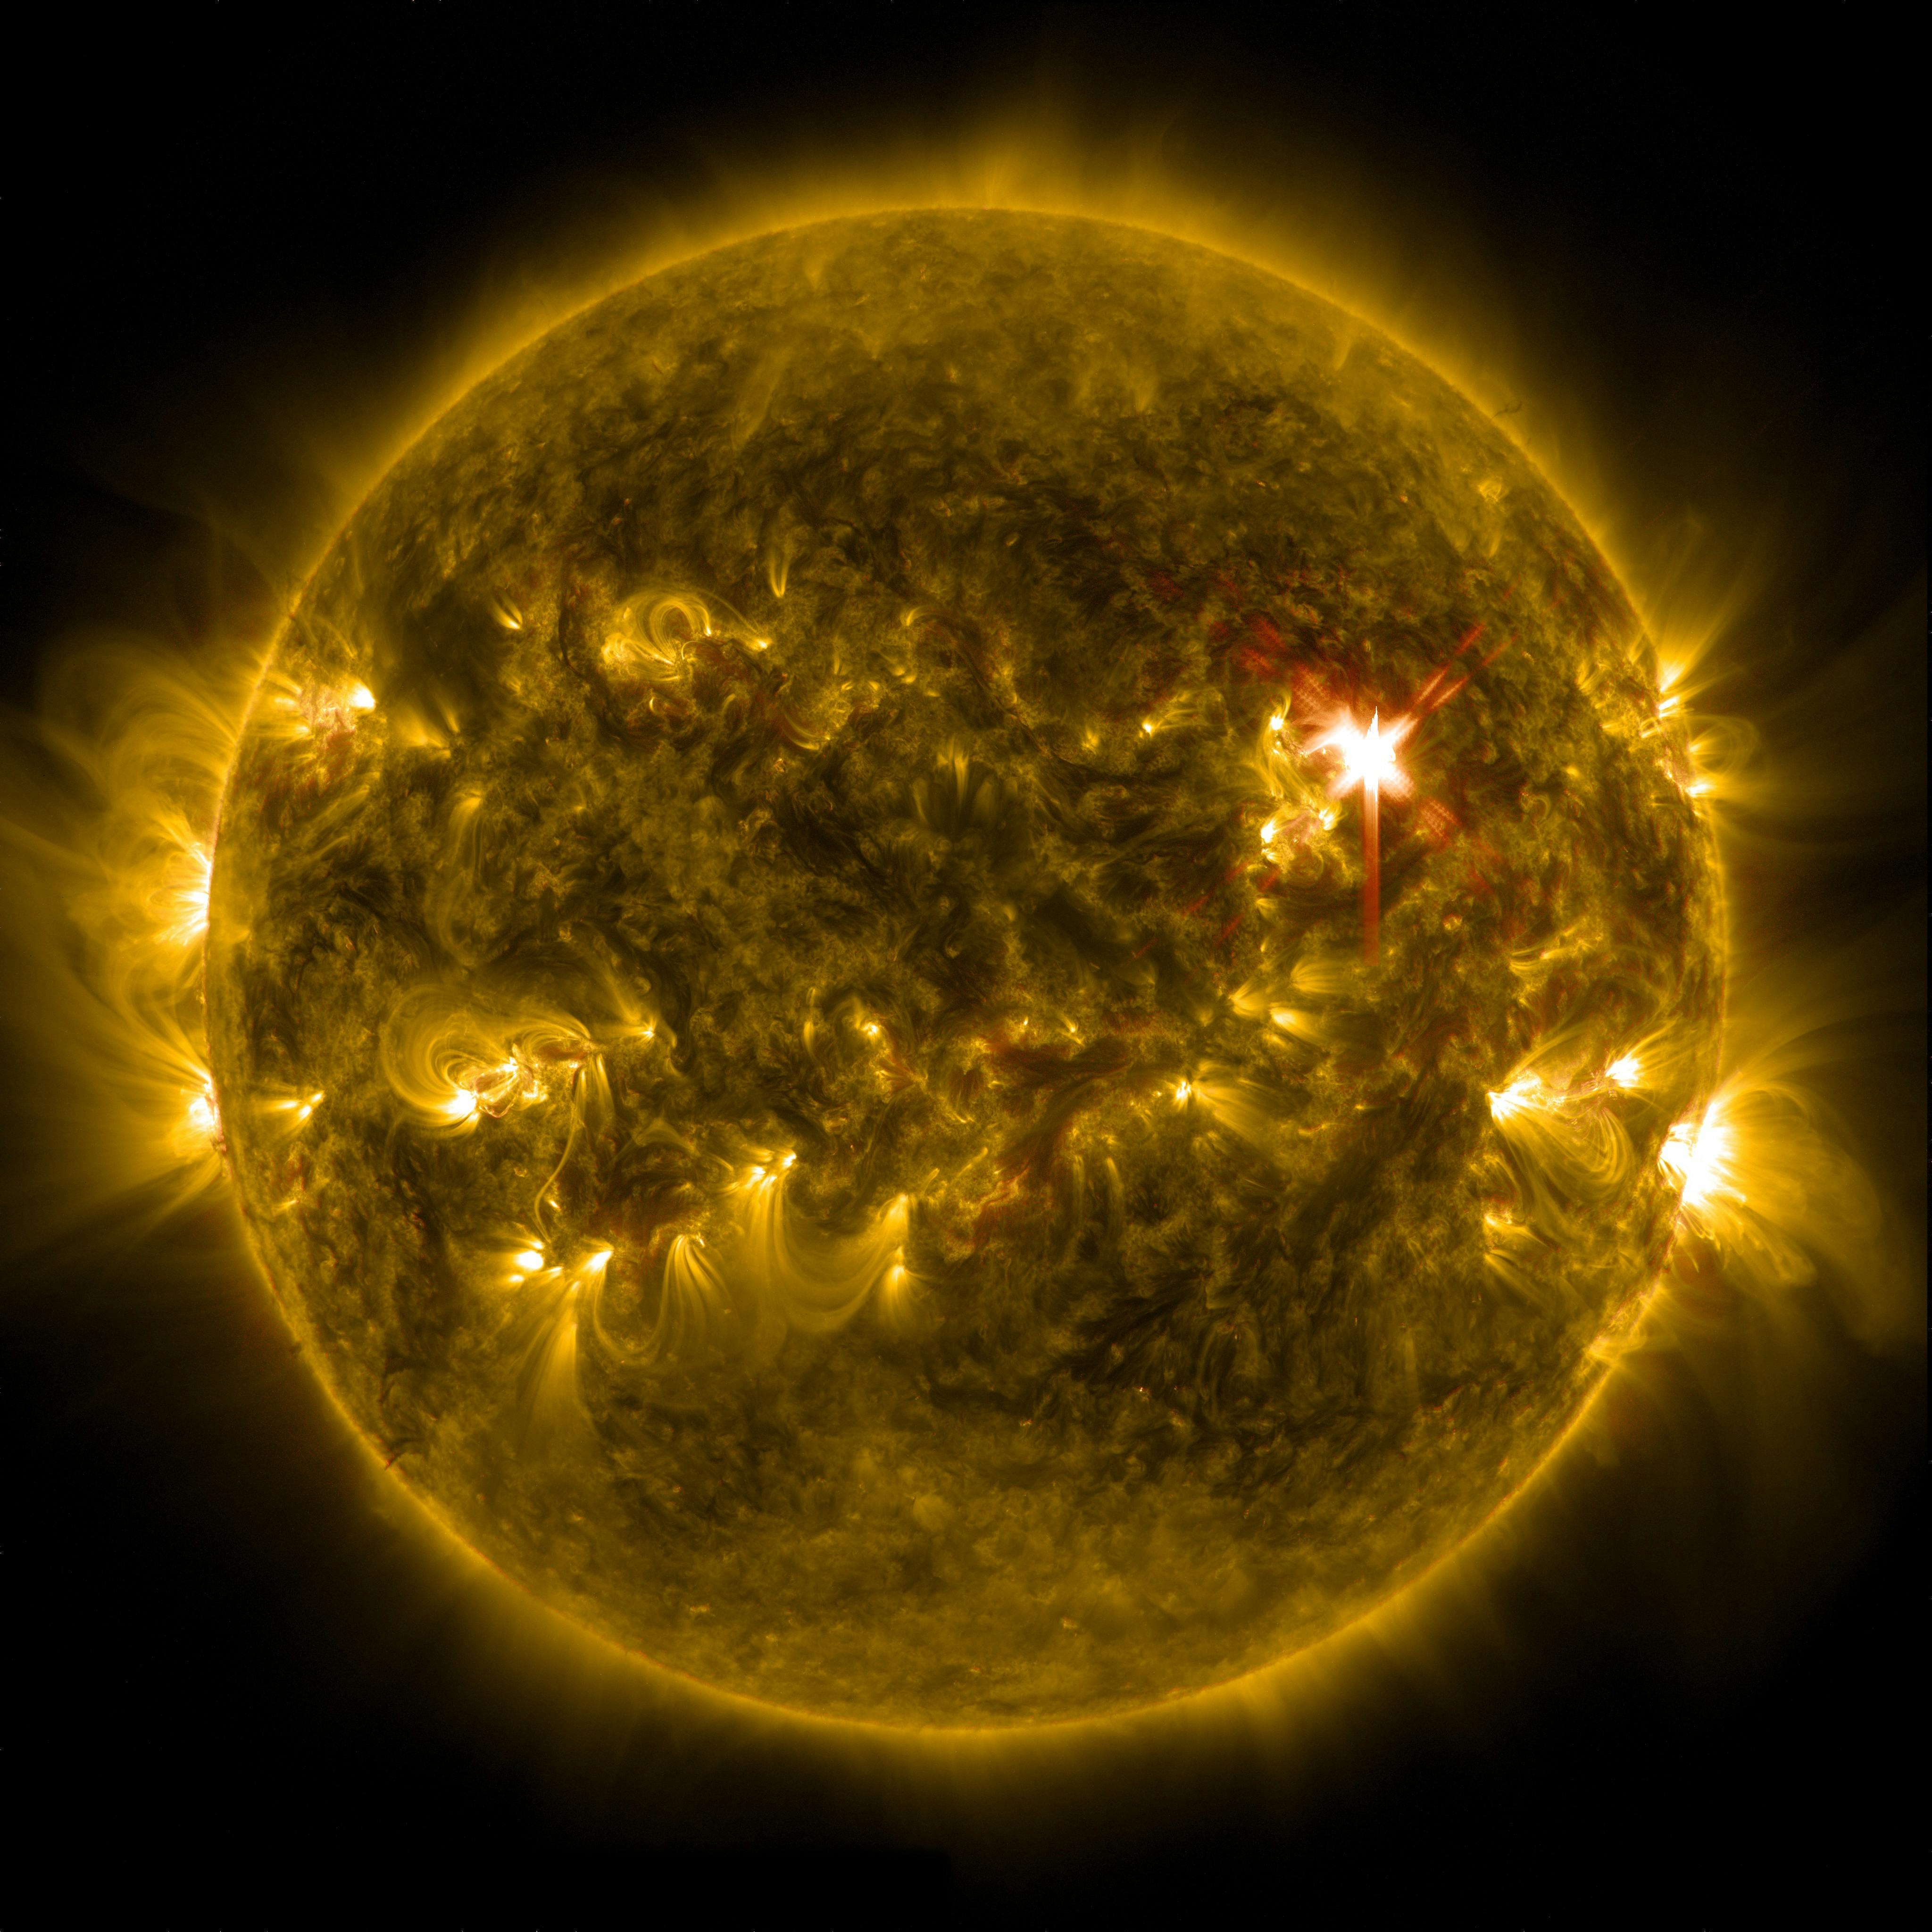 solar-flare-sun-eruption-energy-39649.jpeg?cs=srgb&dl=pexels-pixabay-39649.jpg&fm=jpg